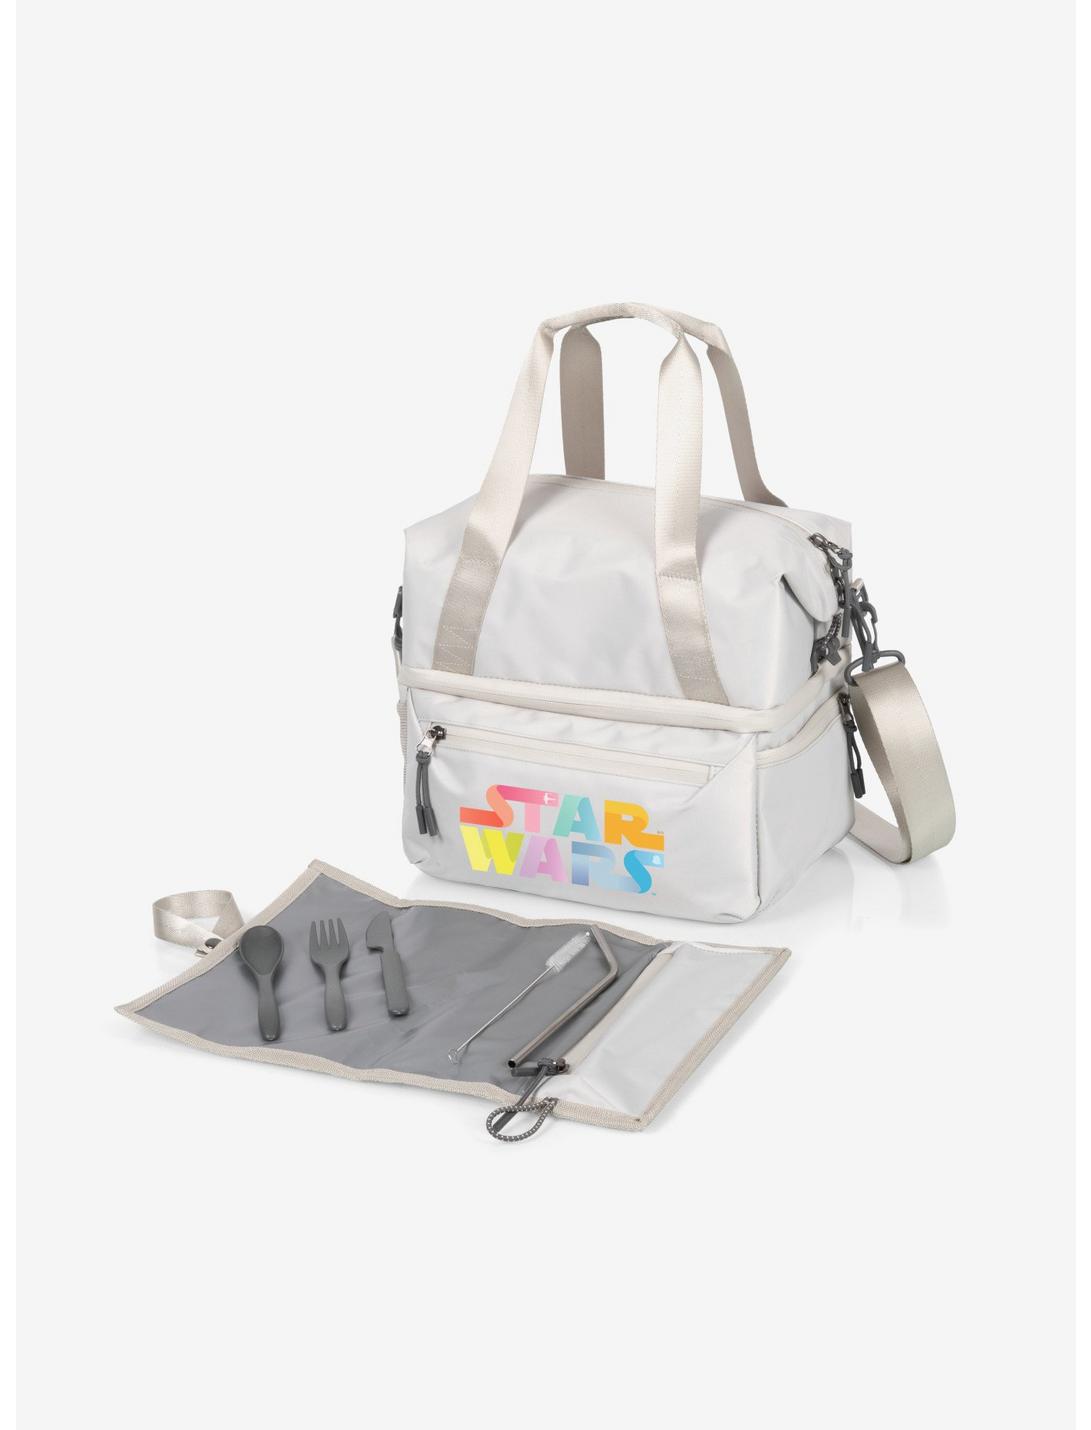 Star Wars Tarana Cooler Lunch Cooler Bag, , hi-res